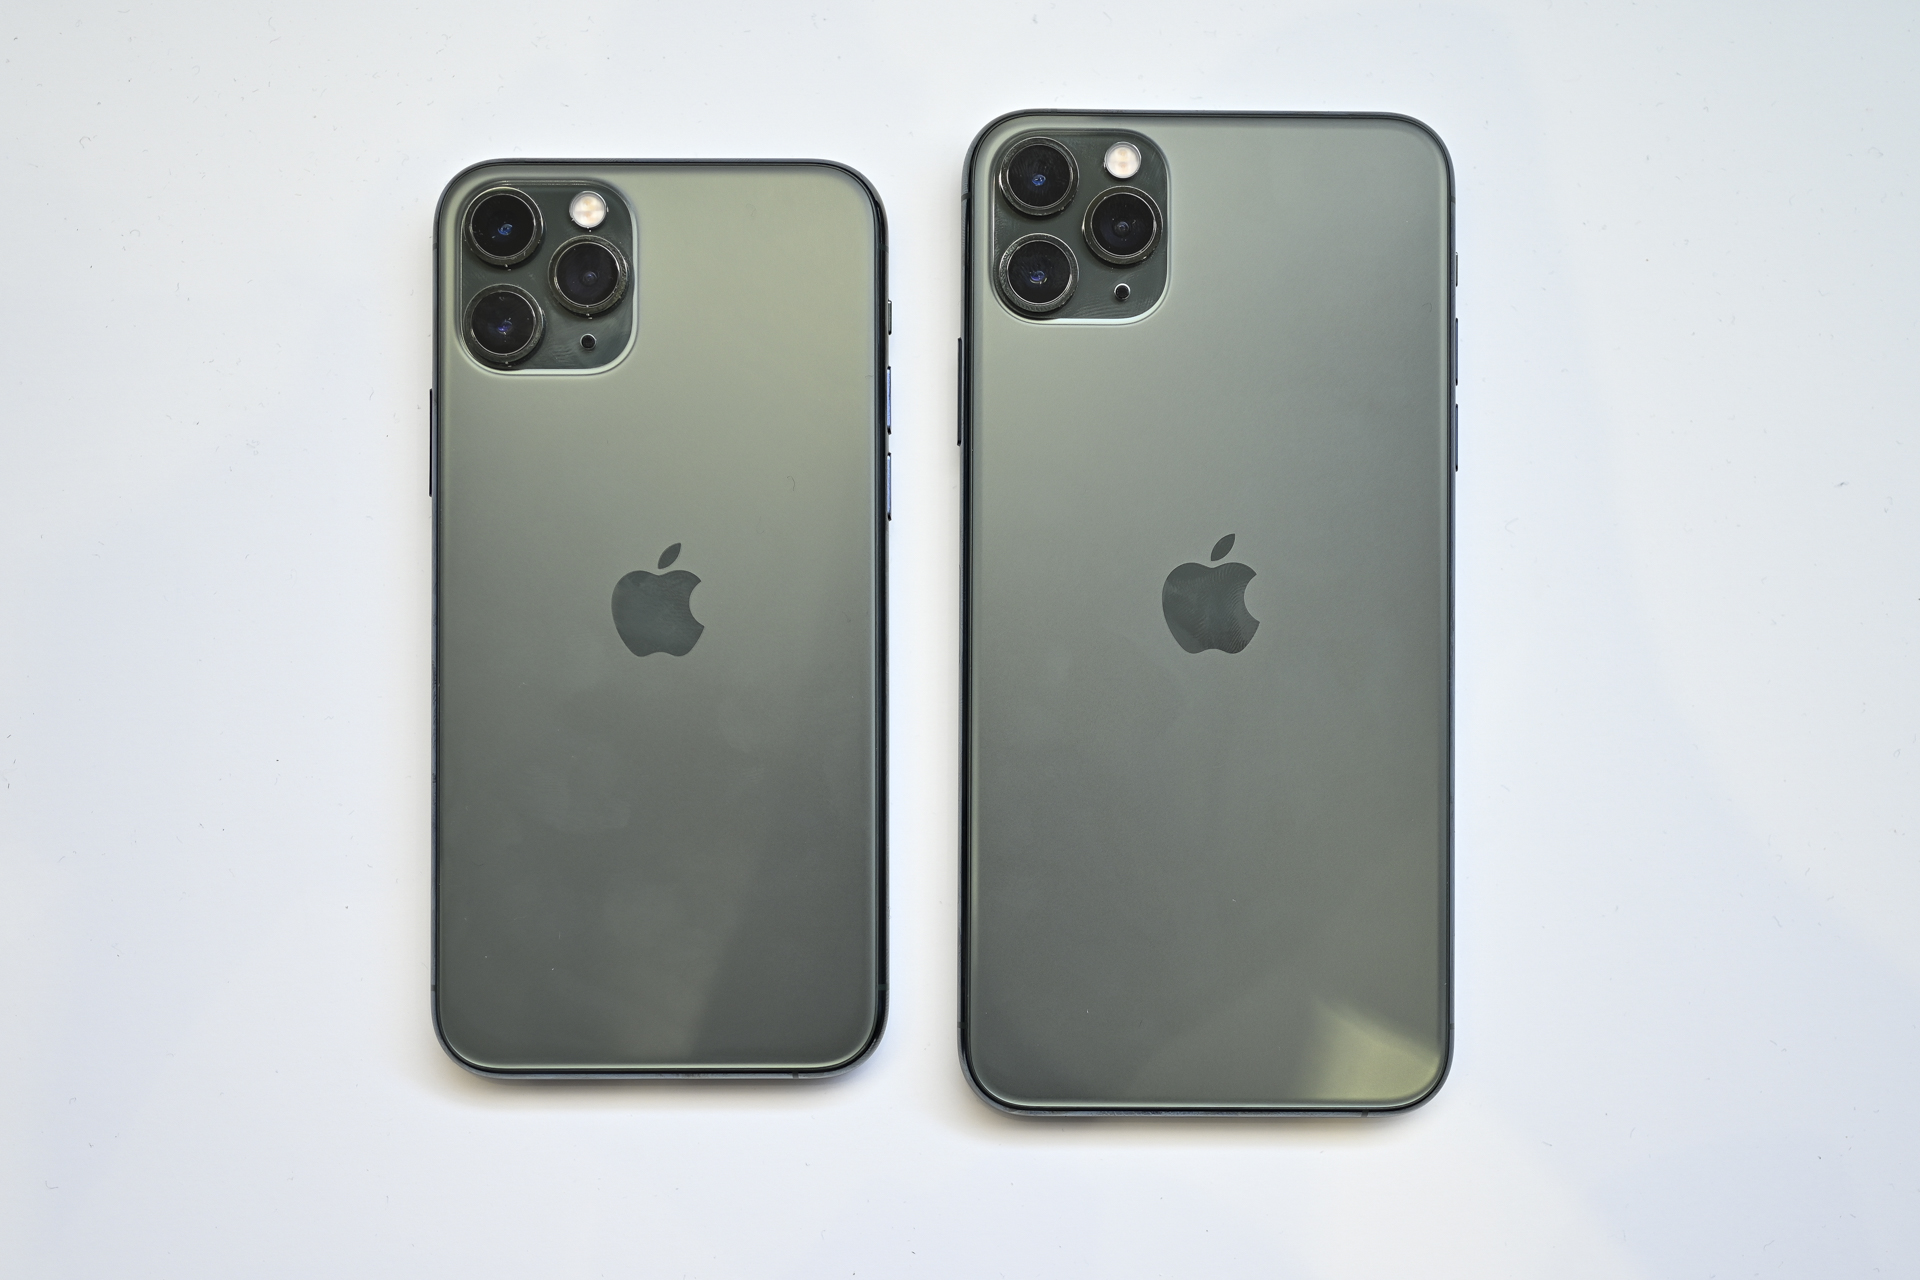 Apple Iphone 11 Vs Iphone 11 Pro Vs Iphone 11 Pro Max Comparison Digital Trends